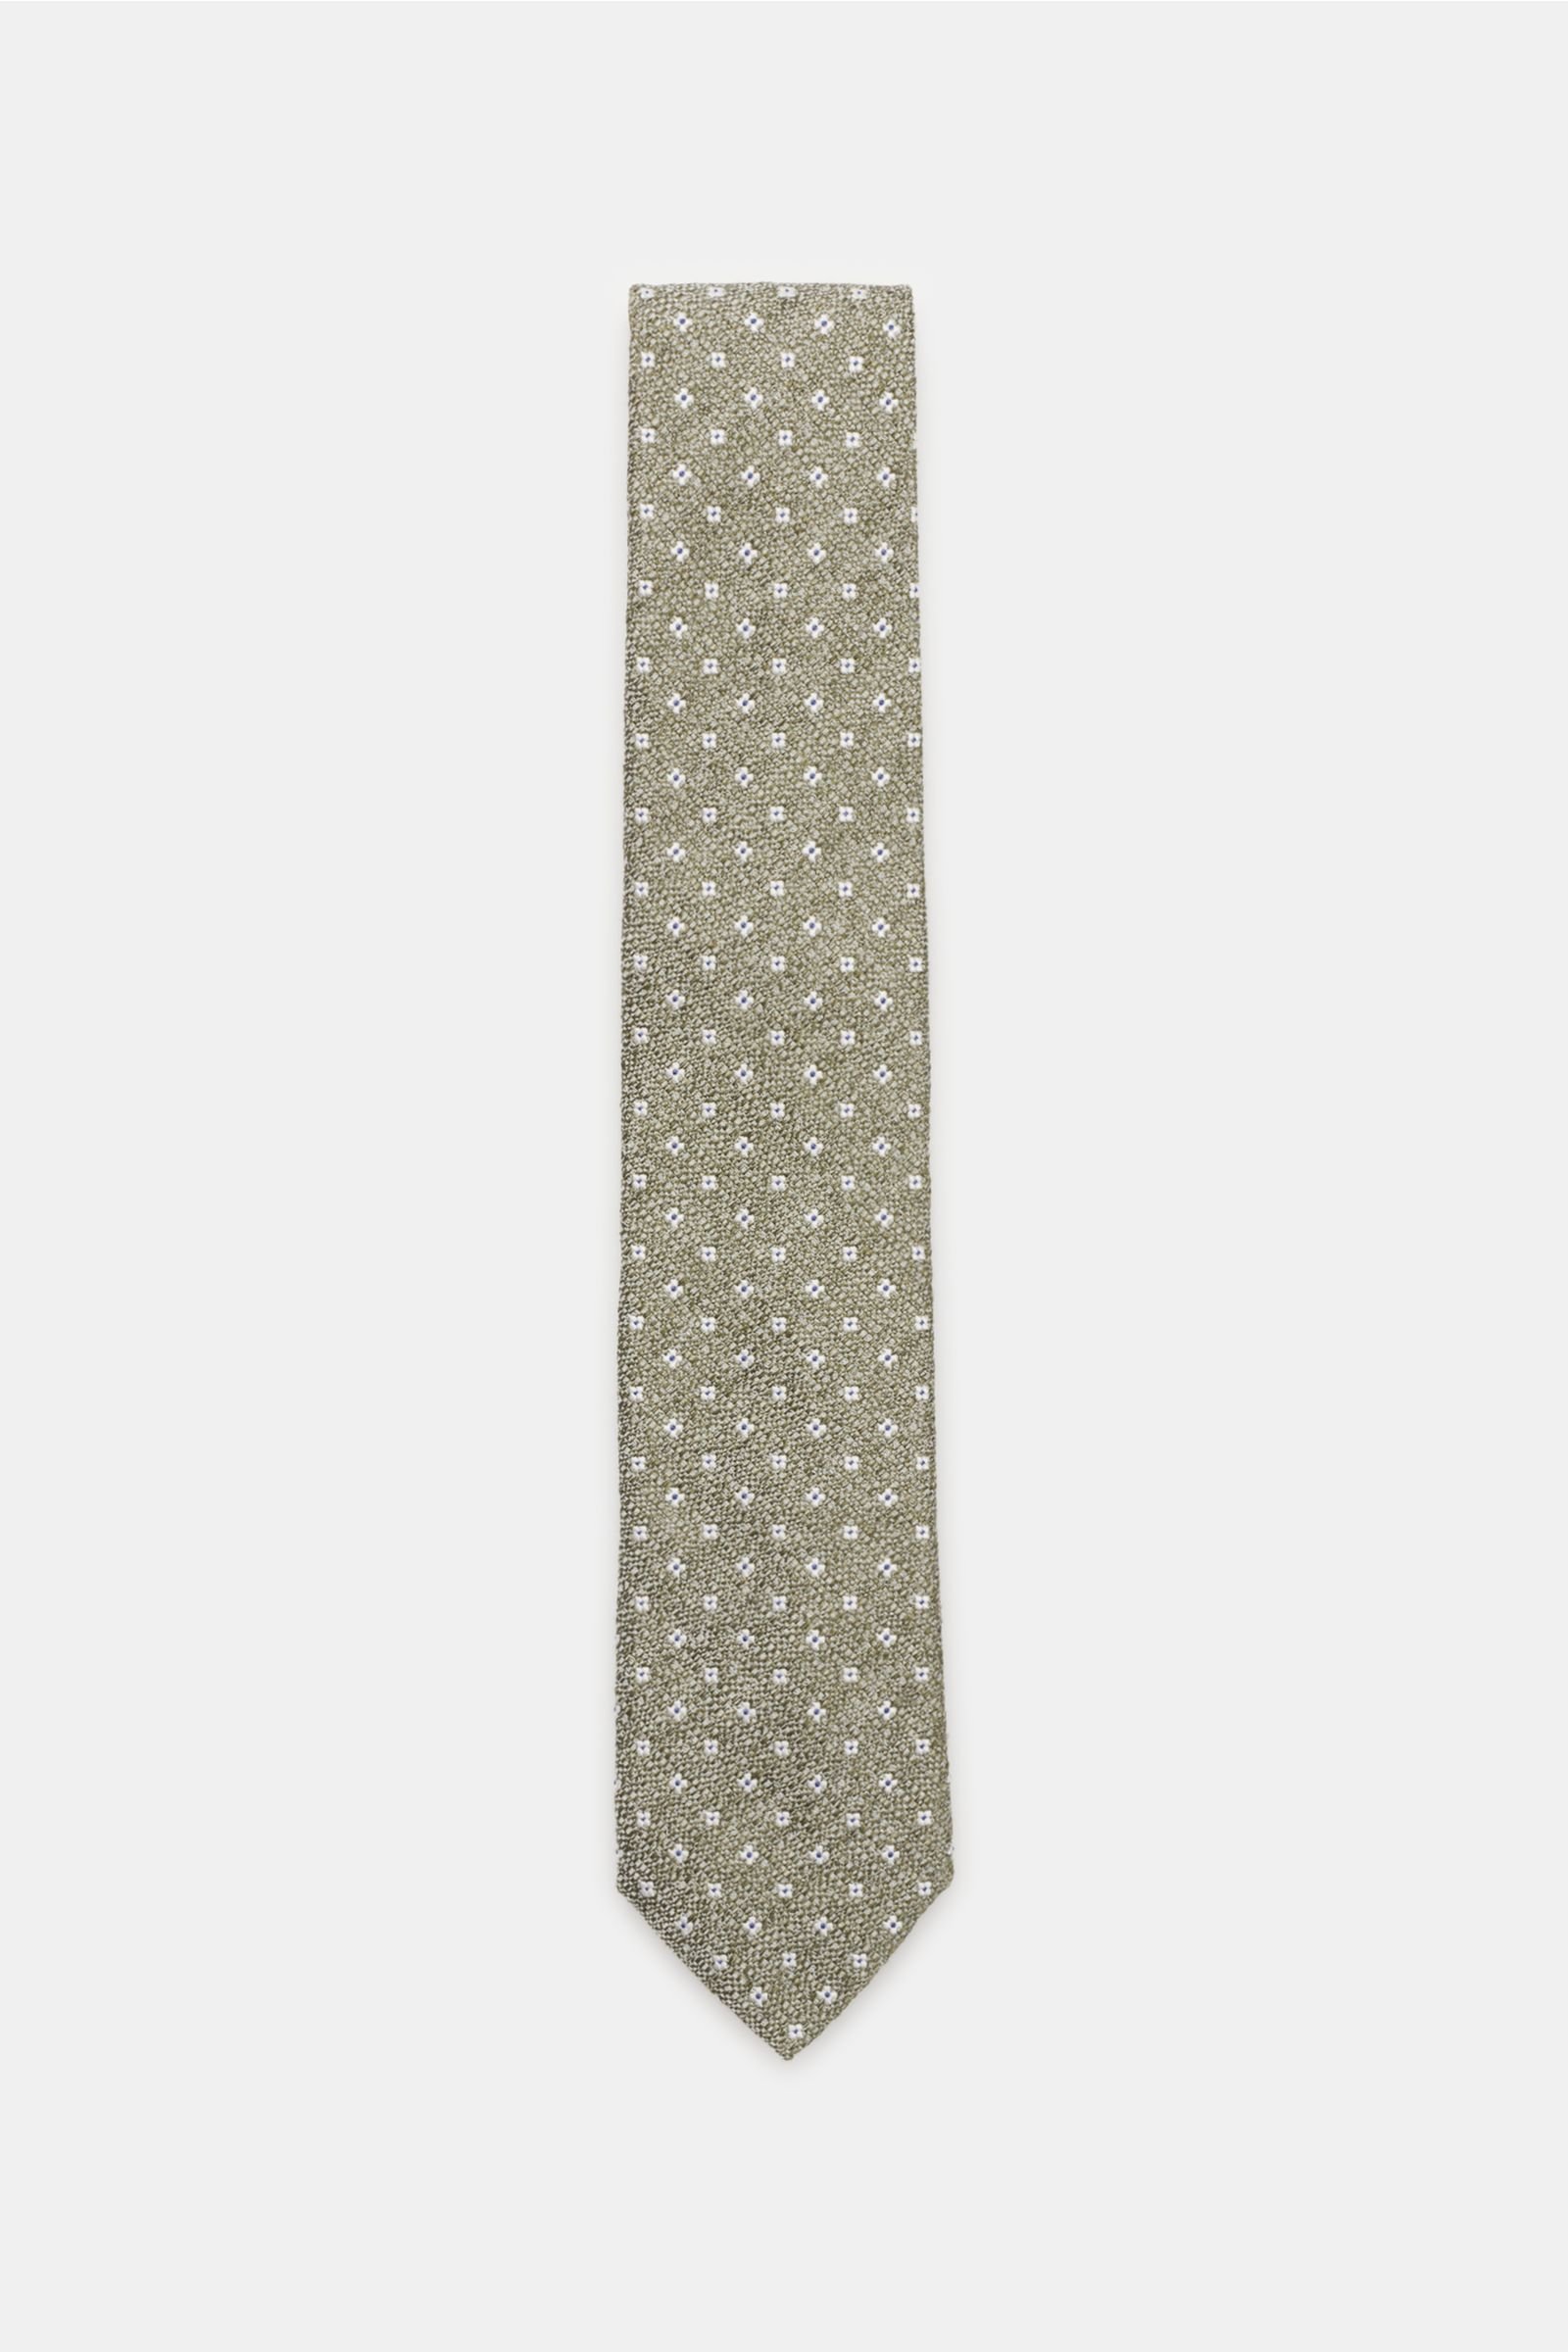 Tie olive patterned